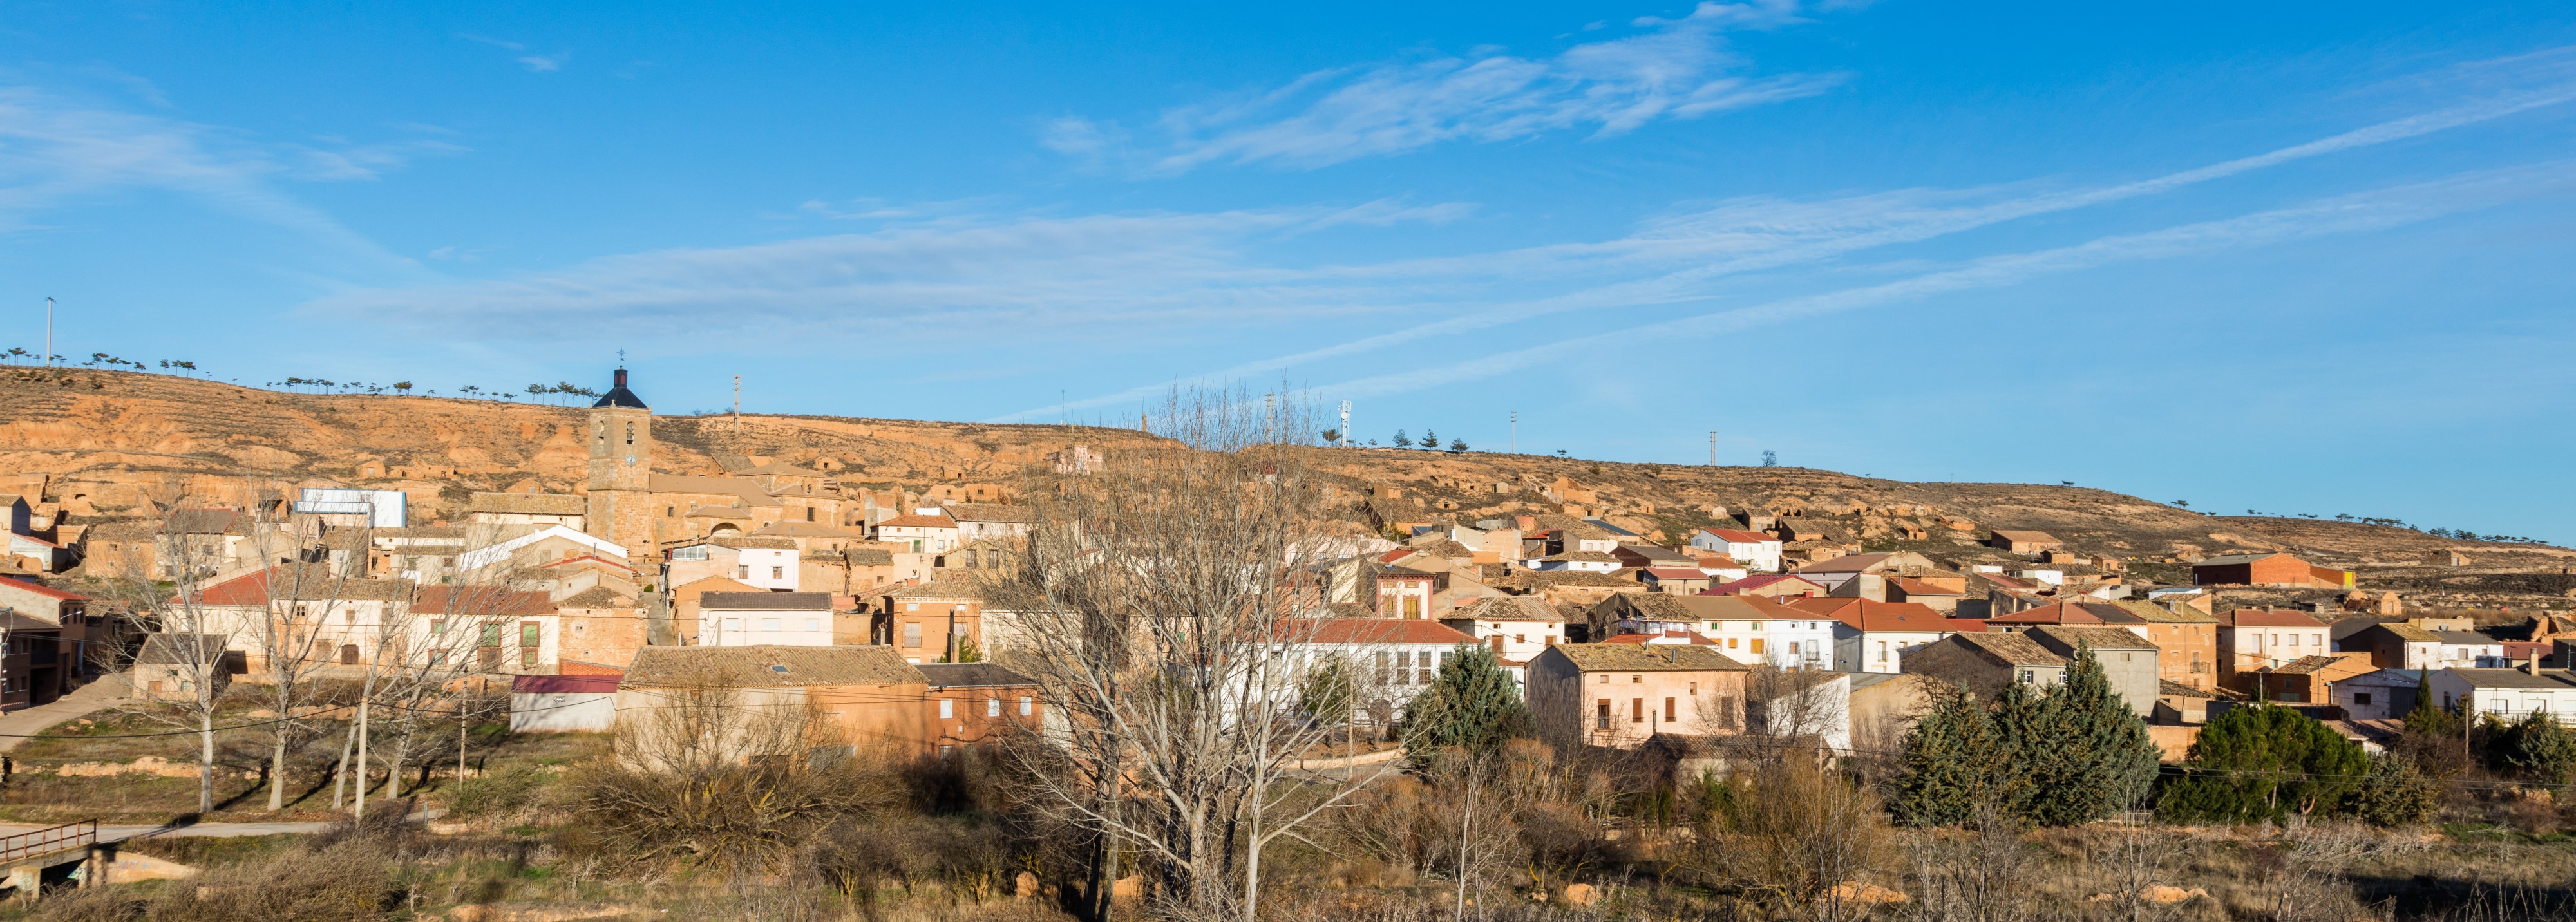 Fuentelmonge, Soria, España, 2015-12-29, DD 97